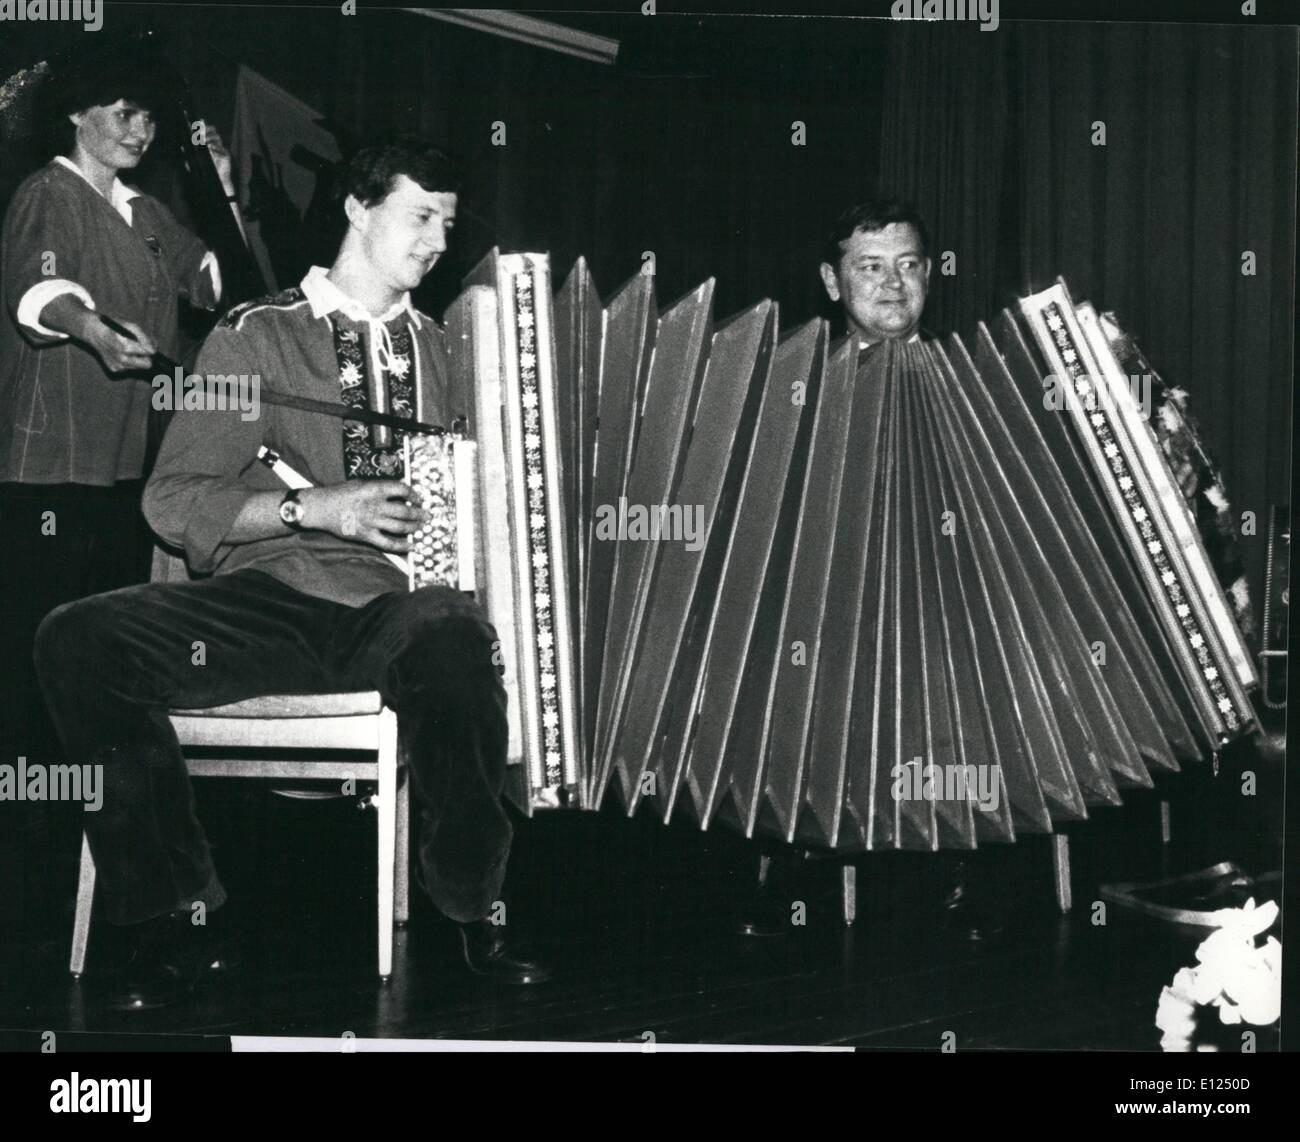 Ottobre 10, 1986 - Il mondo più grande Ã¢â'¬Å"Schwyzer&ouml;rgeliÃ¢â'¬Â Ã¢â'¬â€oe due uomini con la tradizionale maglietta svizzero ha presentato il Foto Stock